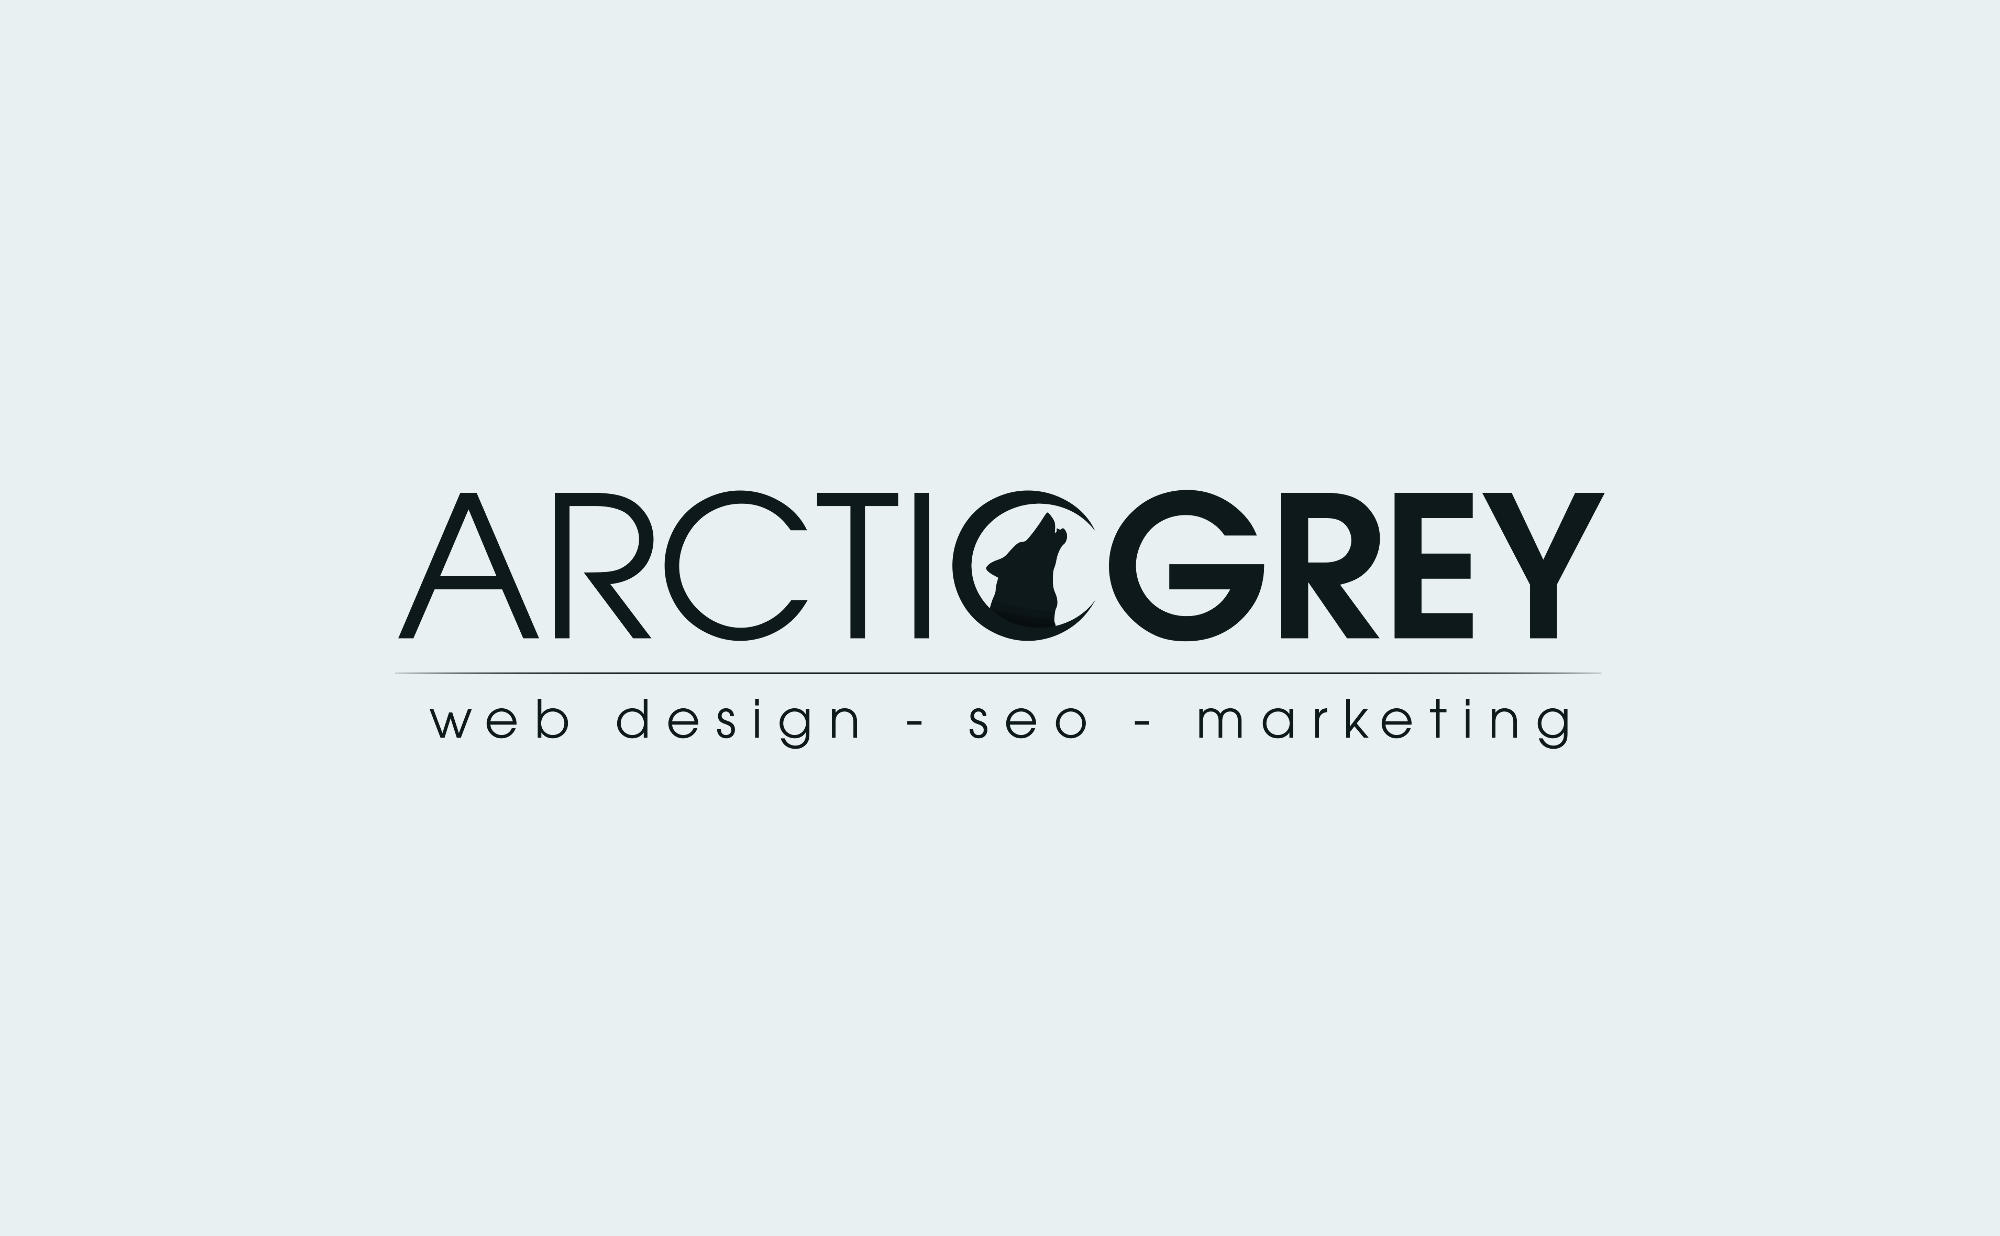 Top SEO Web Development Company Logo: Arctic Grey Inc